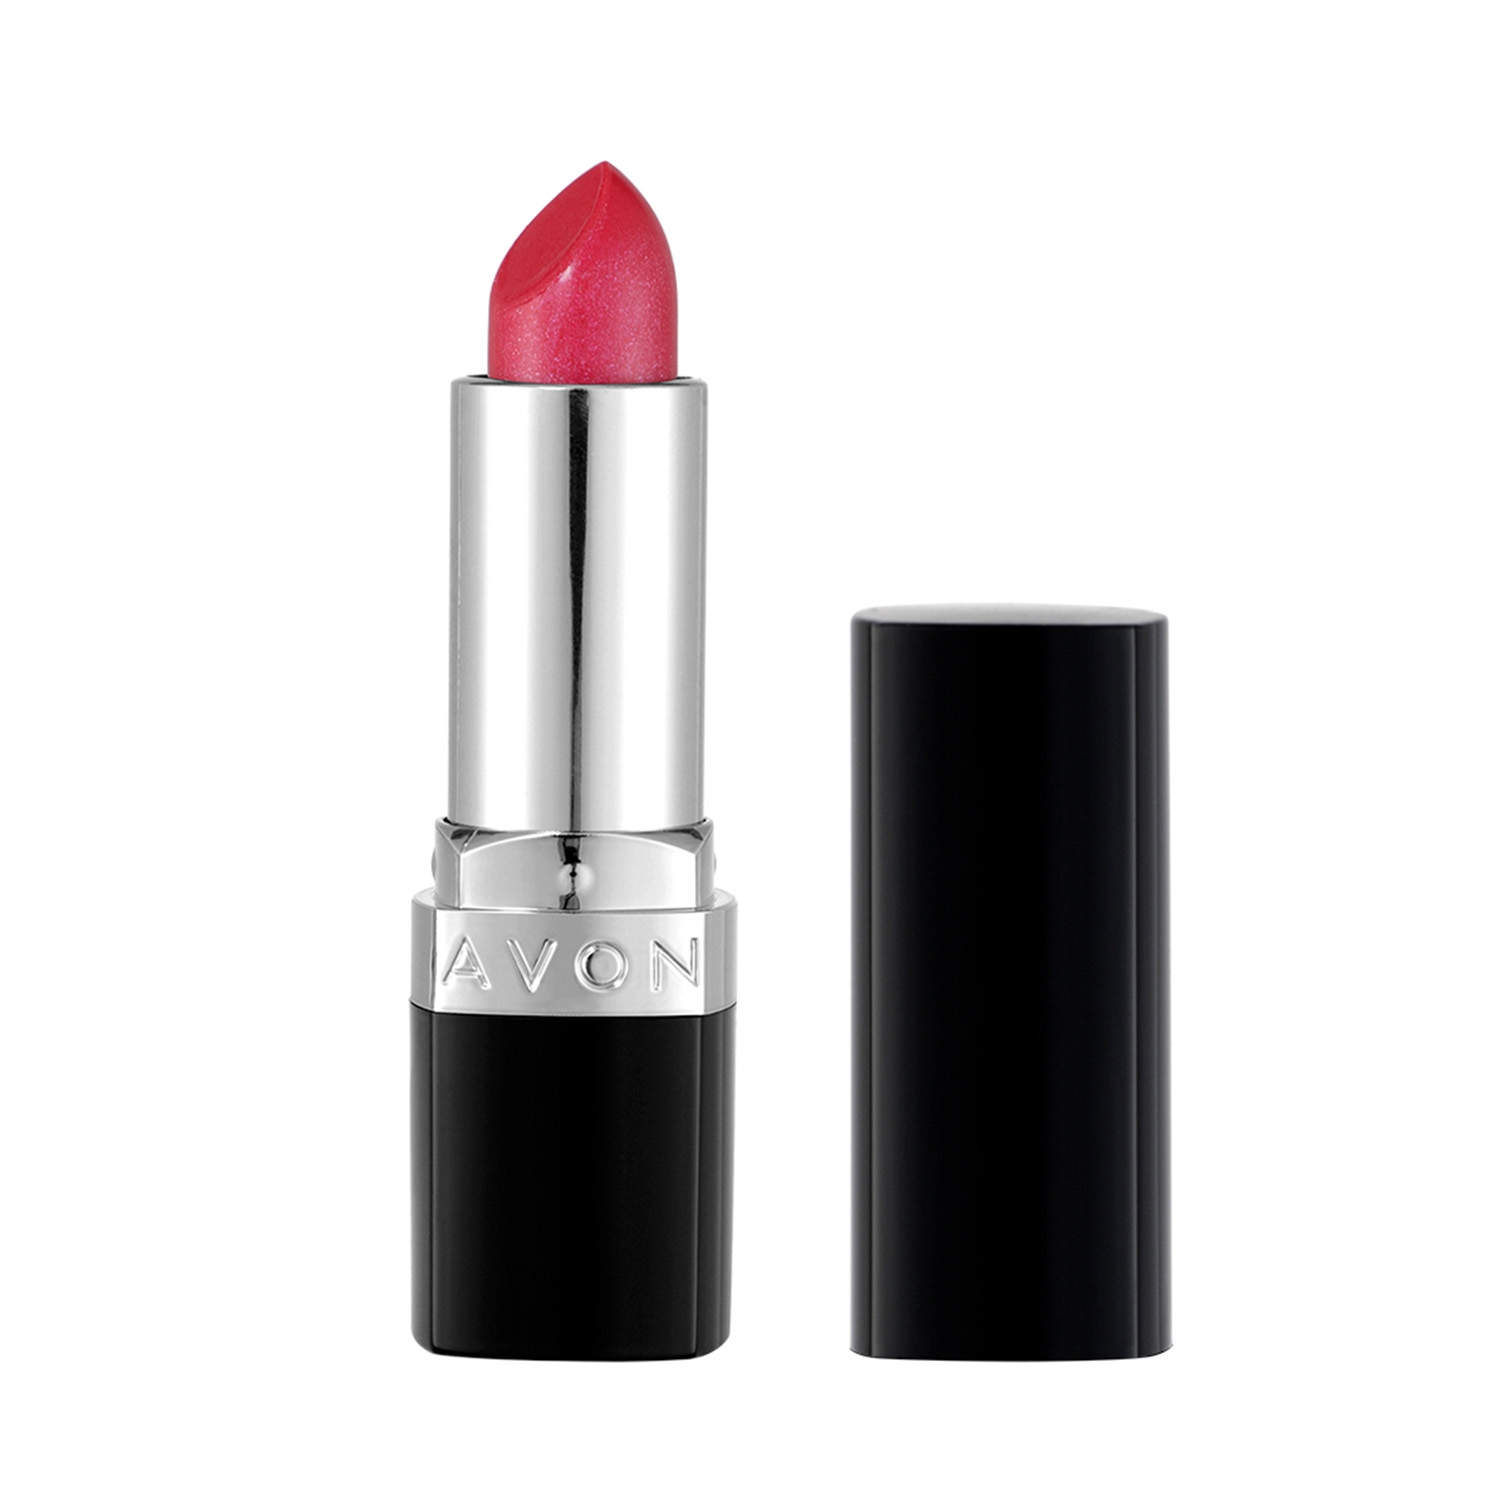 Avon | Avon True Color Lipstick SPF 15 - Fuchsia Fever (3.8g)